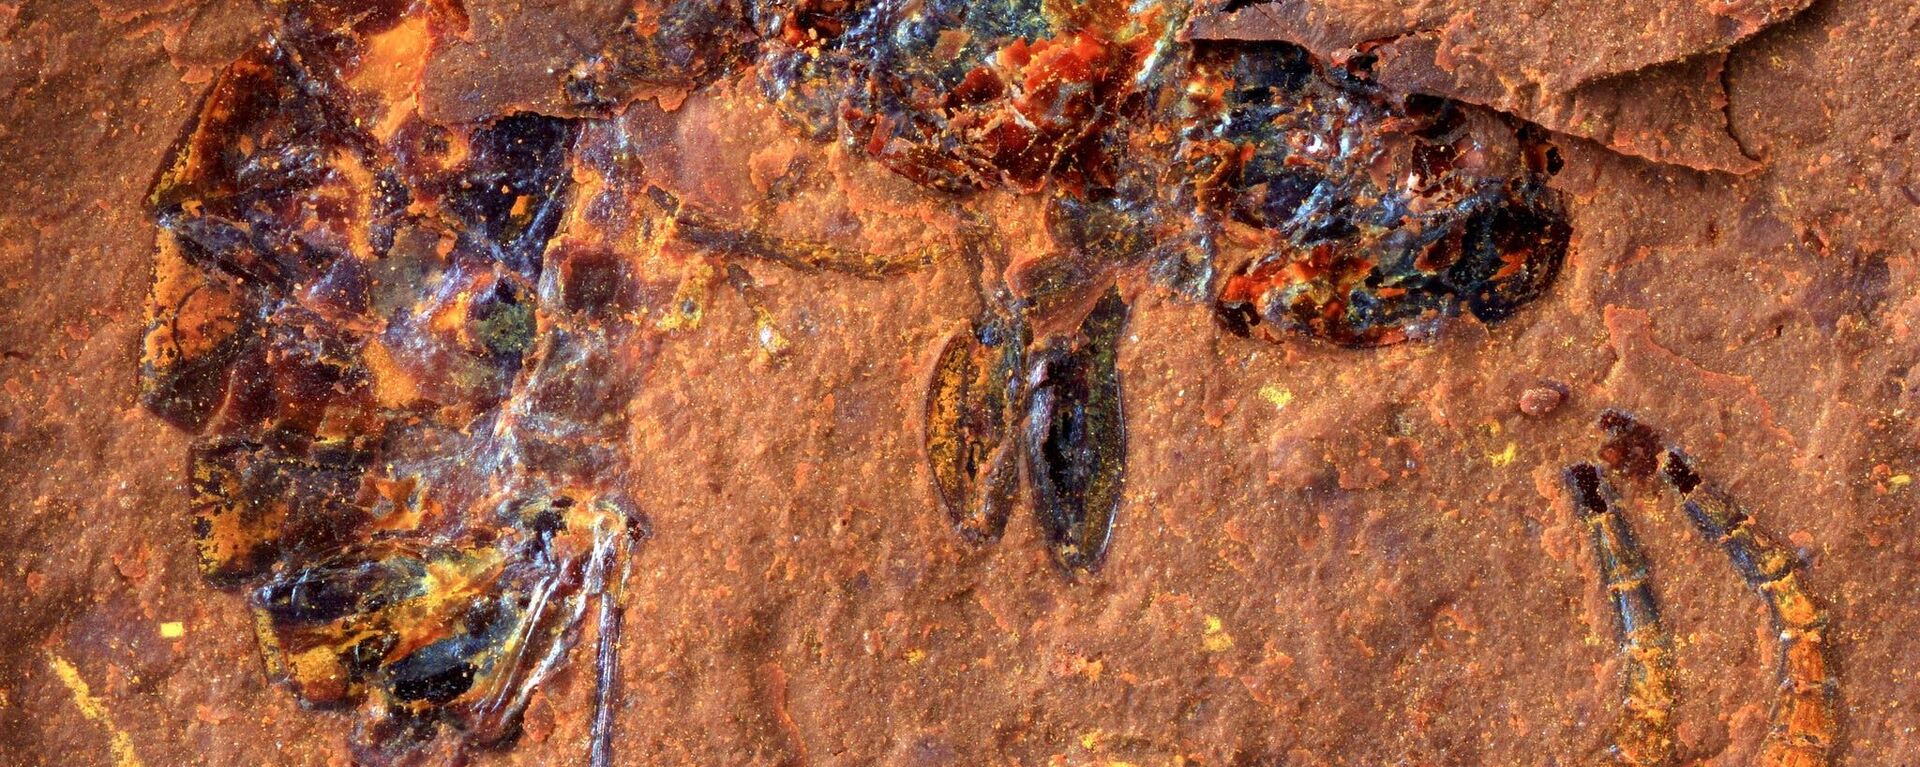 Vespa fossilizada na rocha - Sputnik Brasil, 1920, 11.01.2022